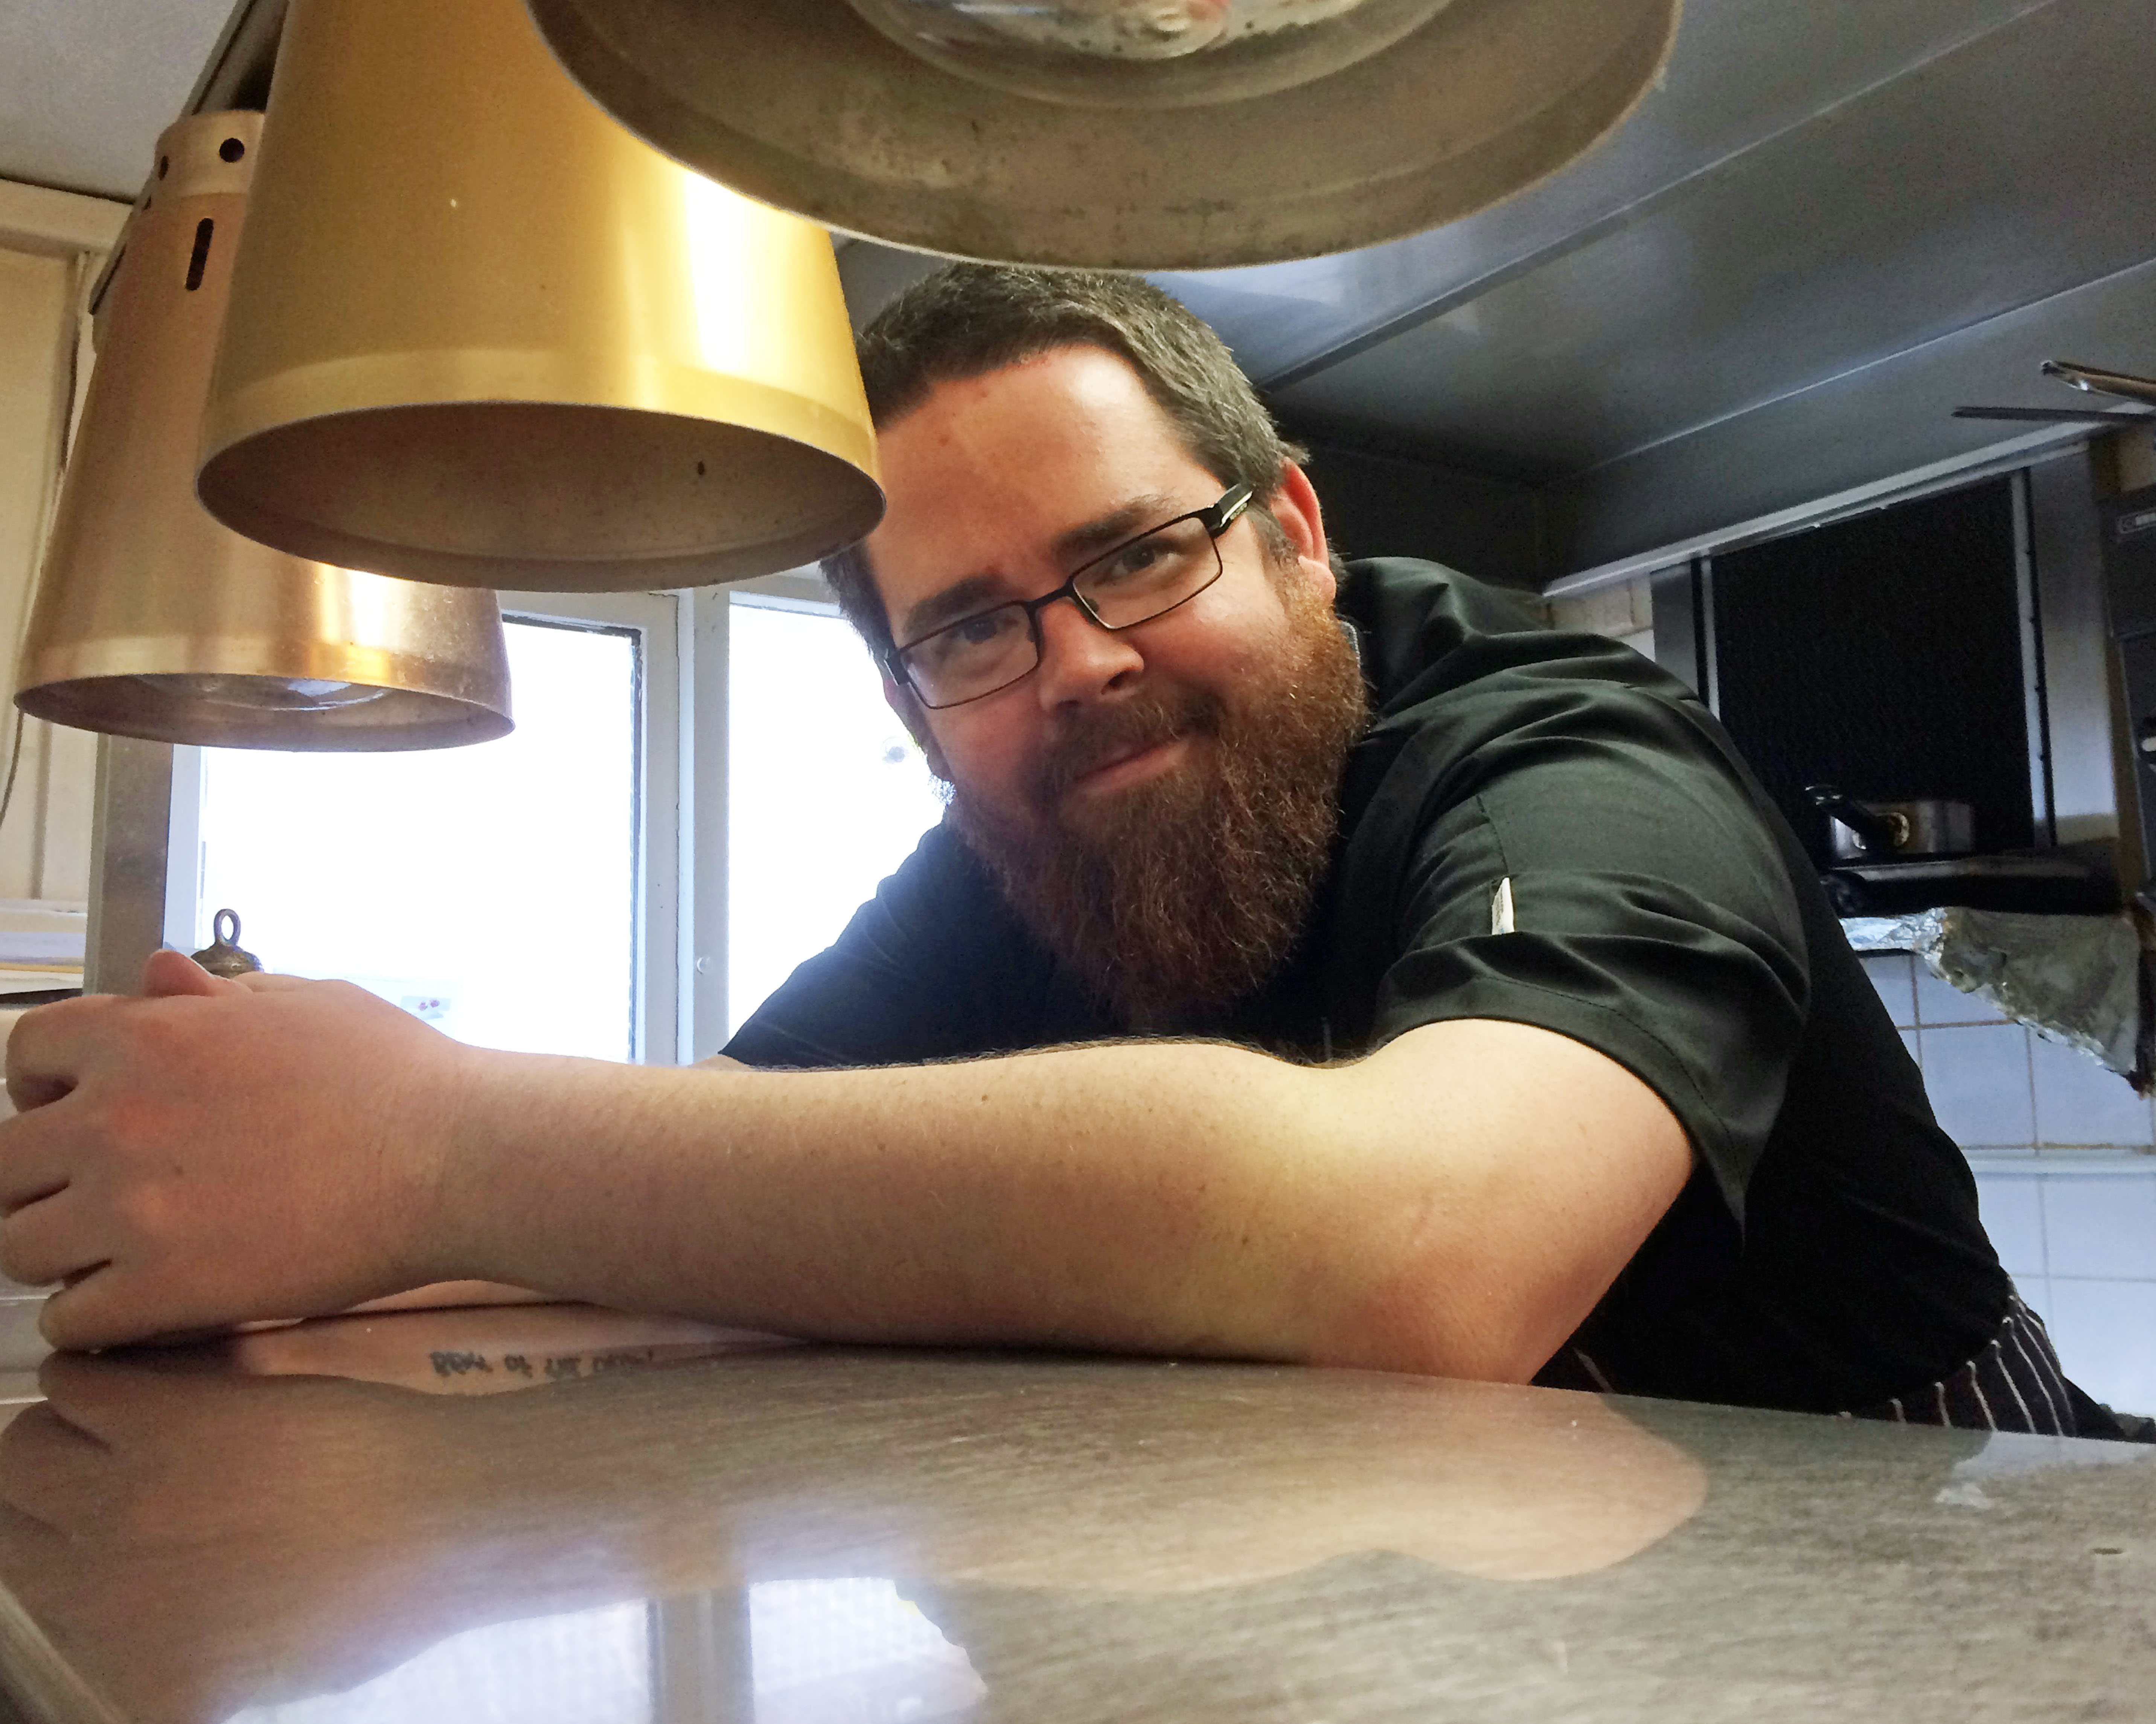 Dan Rees joins ‘Team Greyfriar’ as executive chef